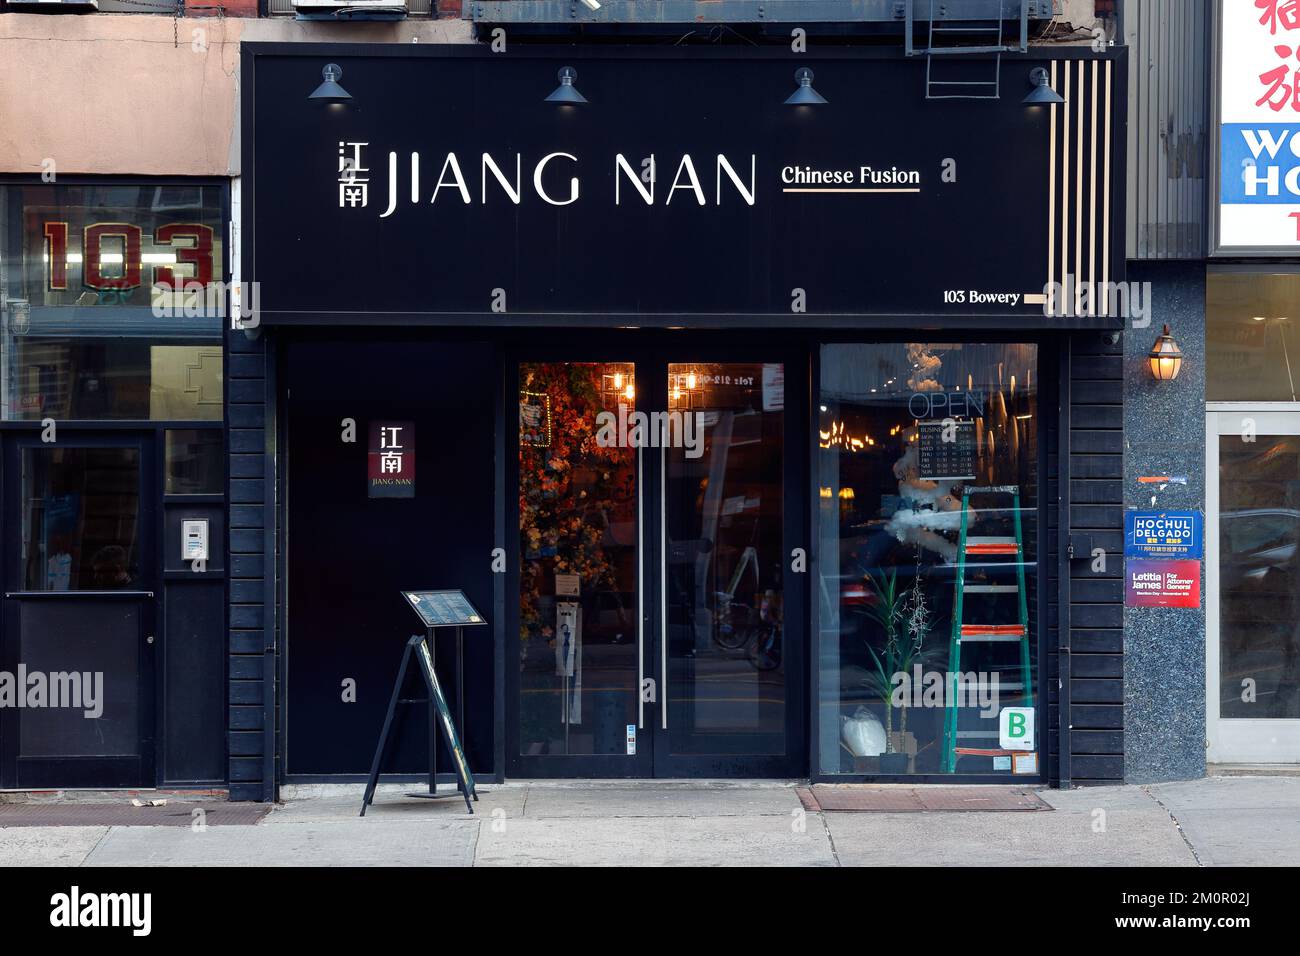 Jiang Nan 江南食府, 103 Bowery, New York, NYC vitrine photo d'un restaurant chinois contemporain dans le quartier chinois de Manhattan. Banque D'Images